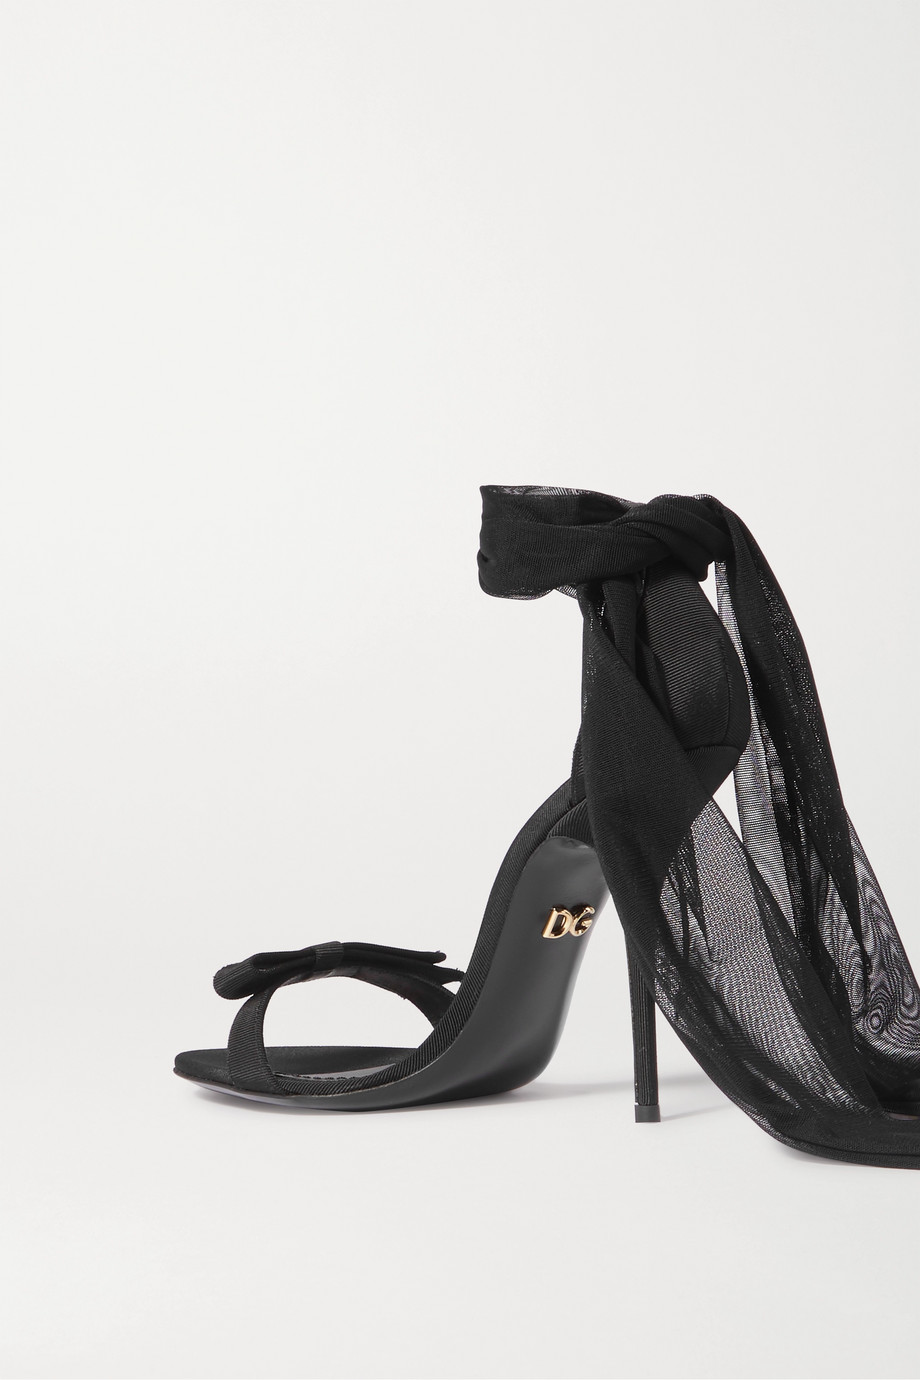 Dolce & Gabbana sandale proljeće ljeto 2020.